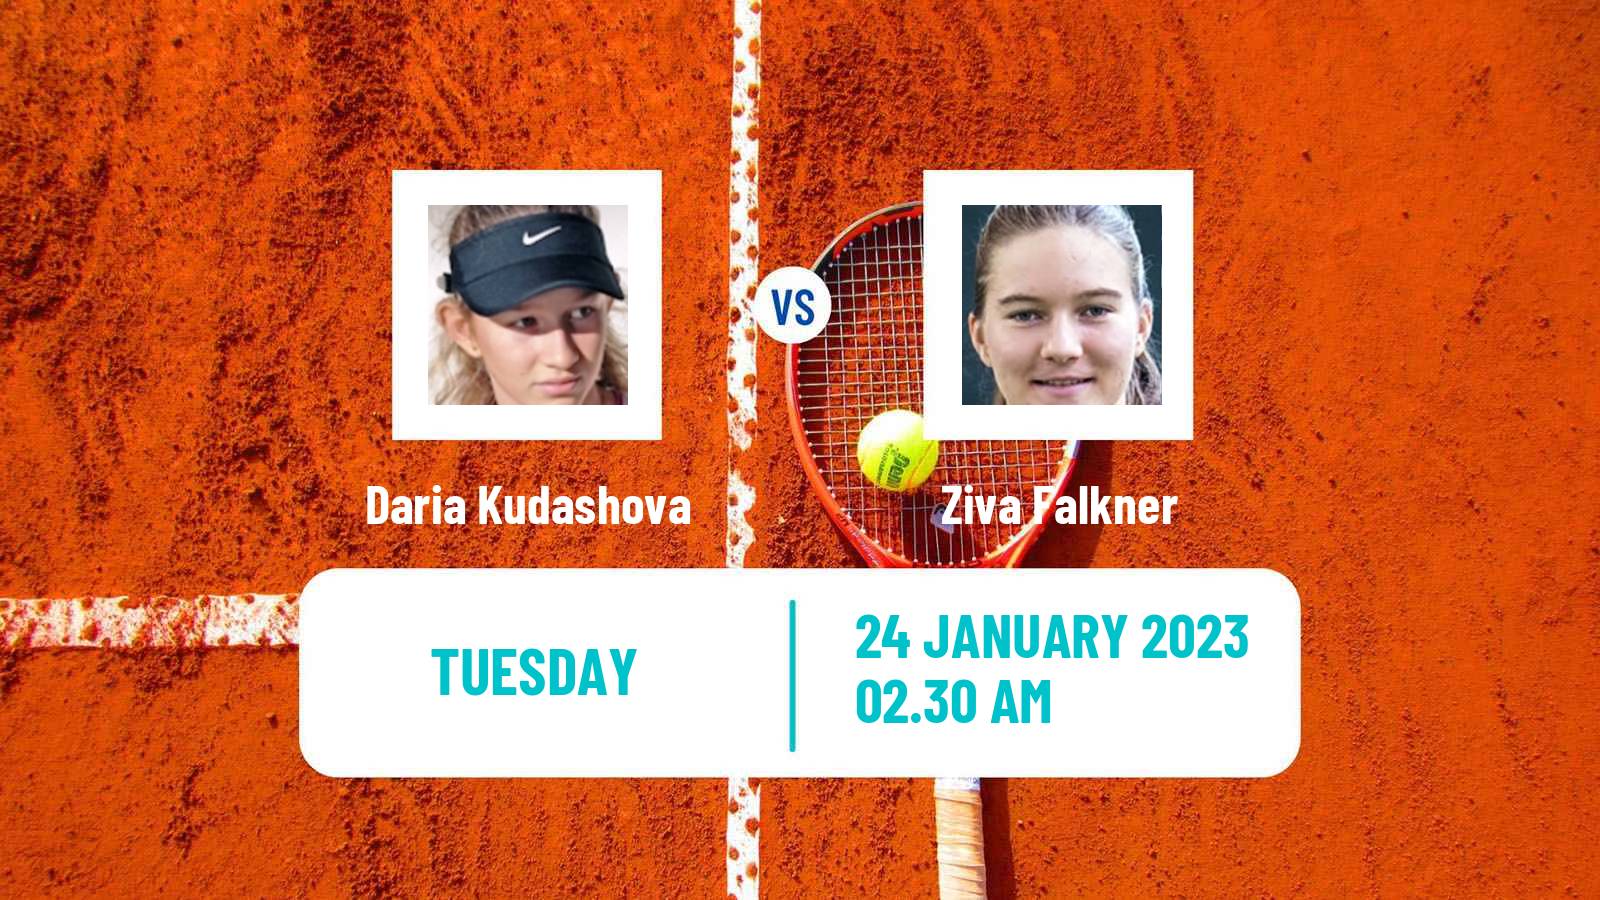 Tennis ITF Tournaments Daria Kudashova - Ziva Falkner